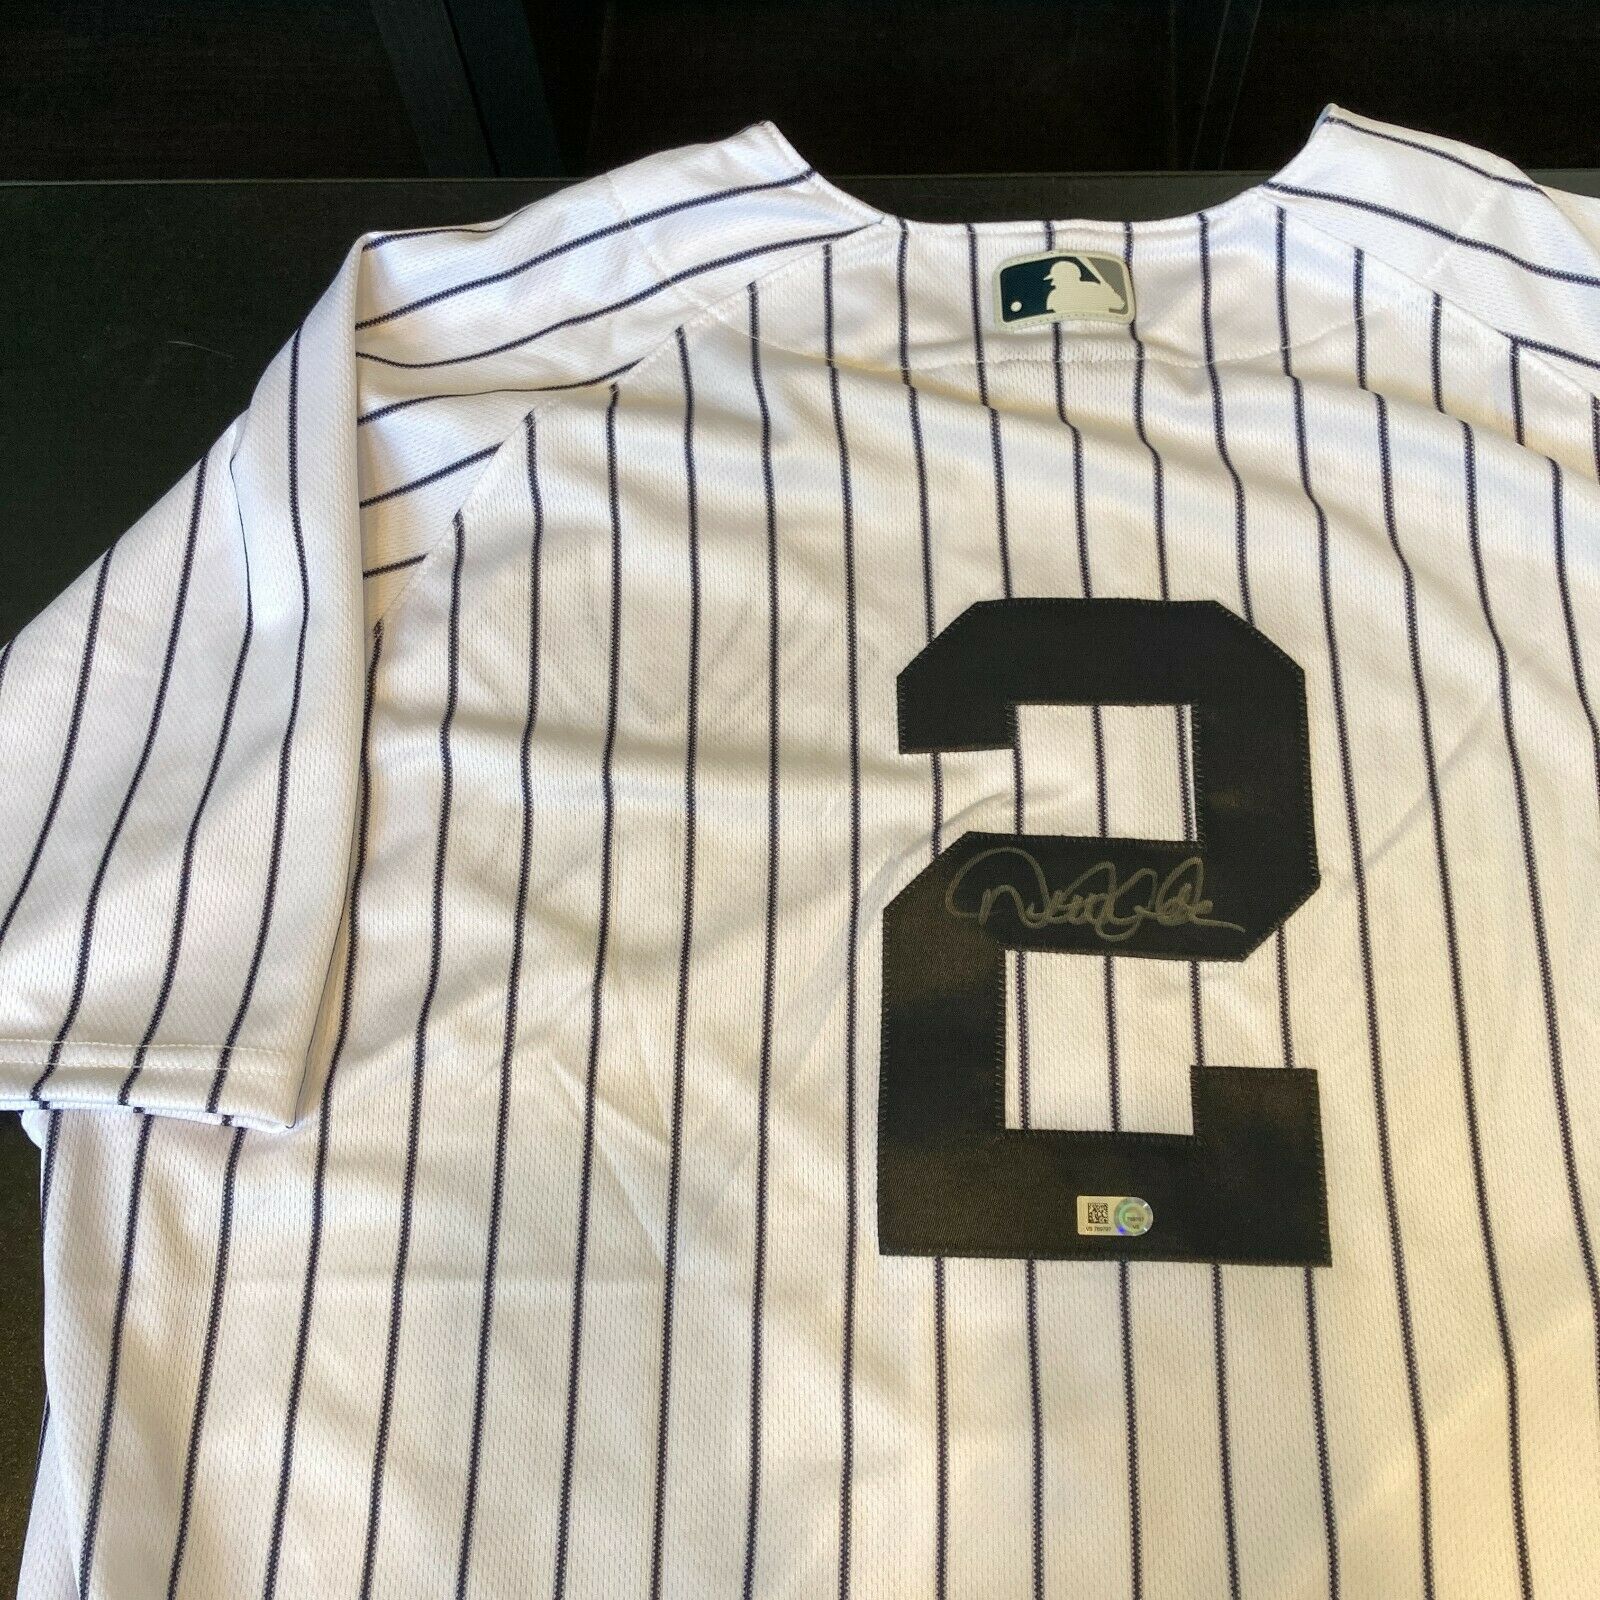 Derek Jeter Signed Authentic Nike New York Yankees Game Model